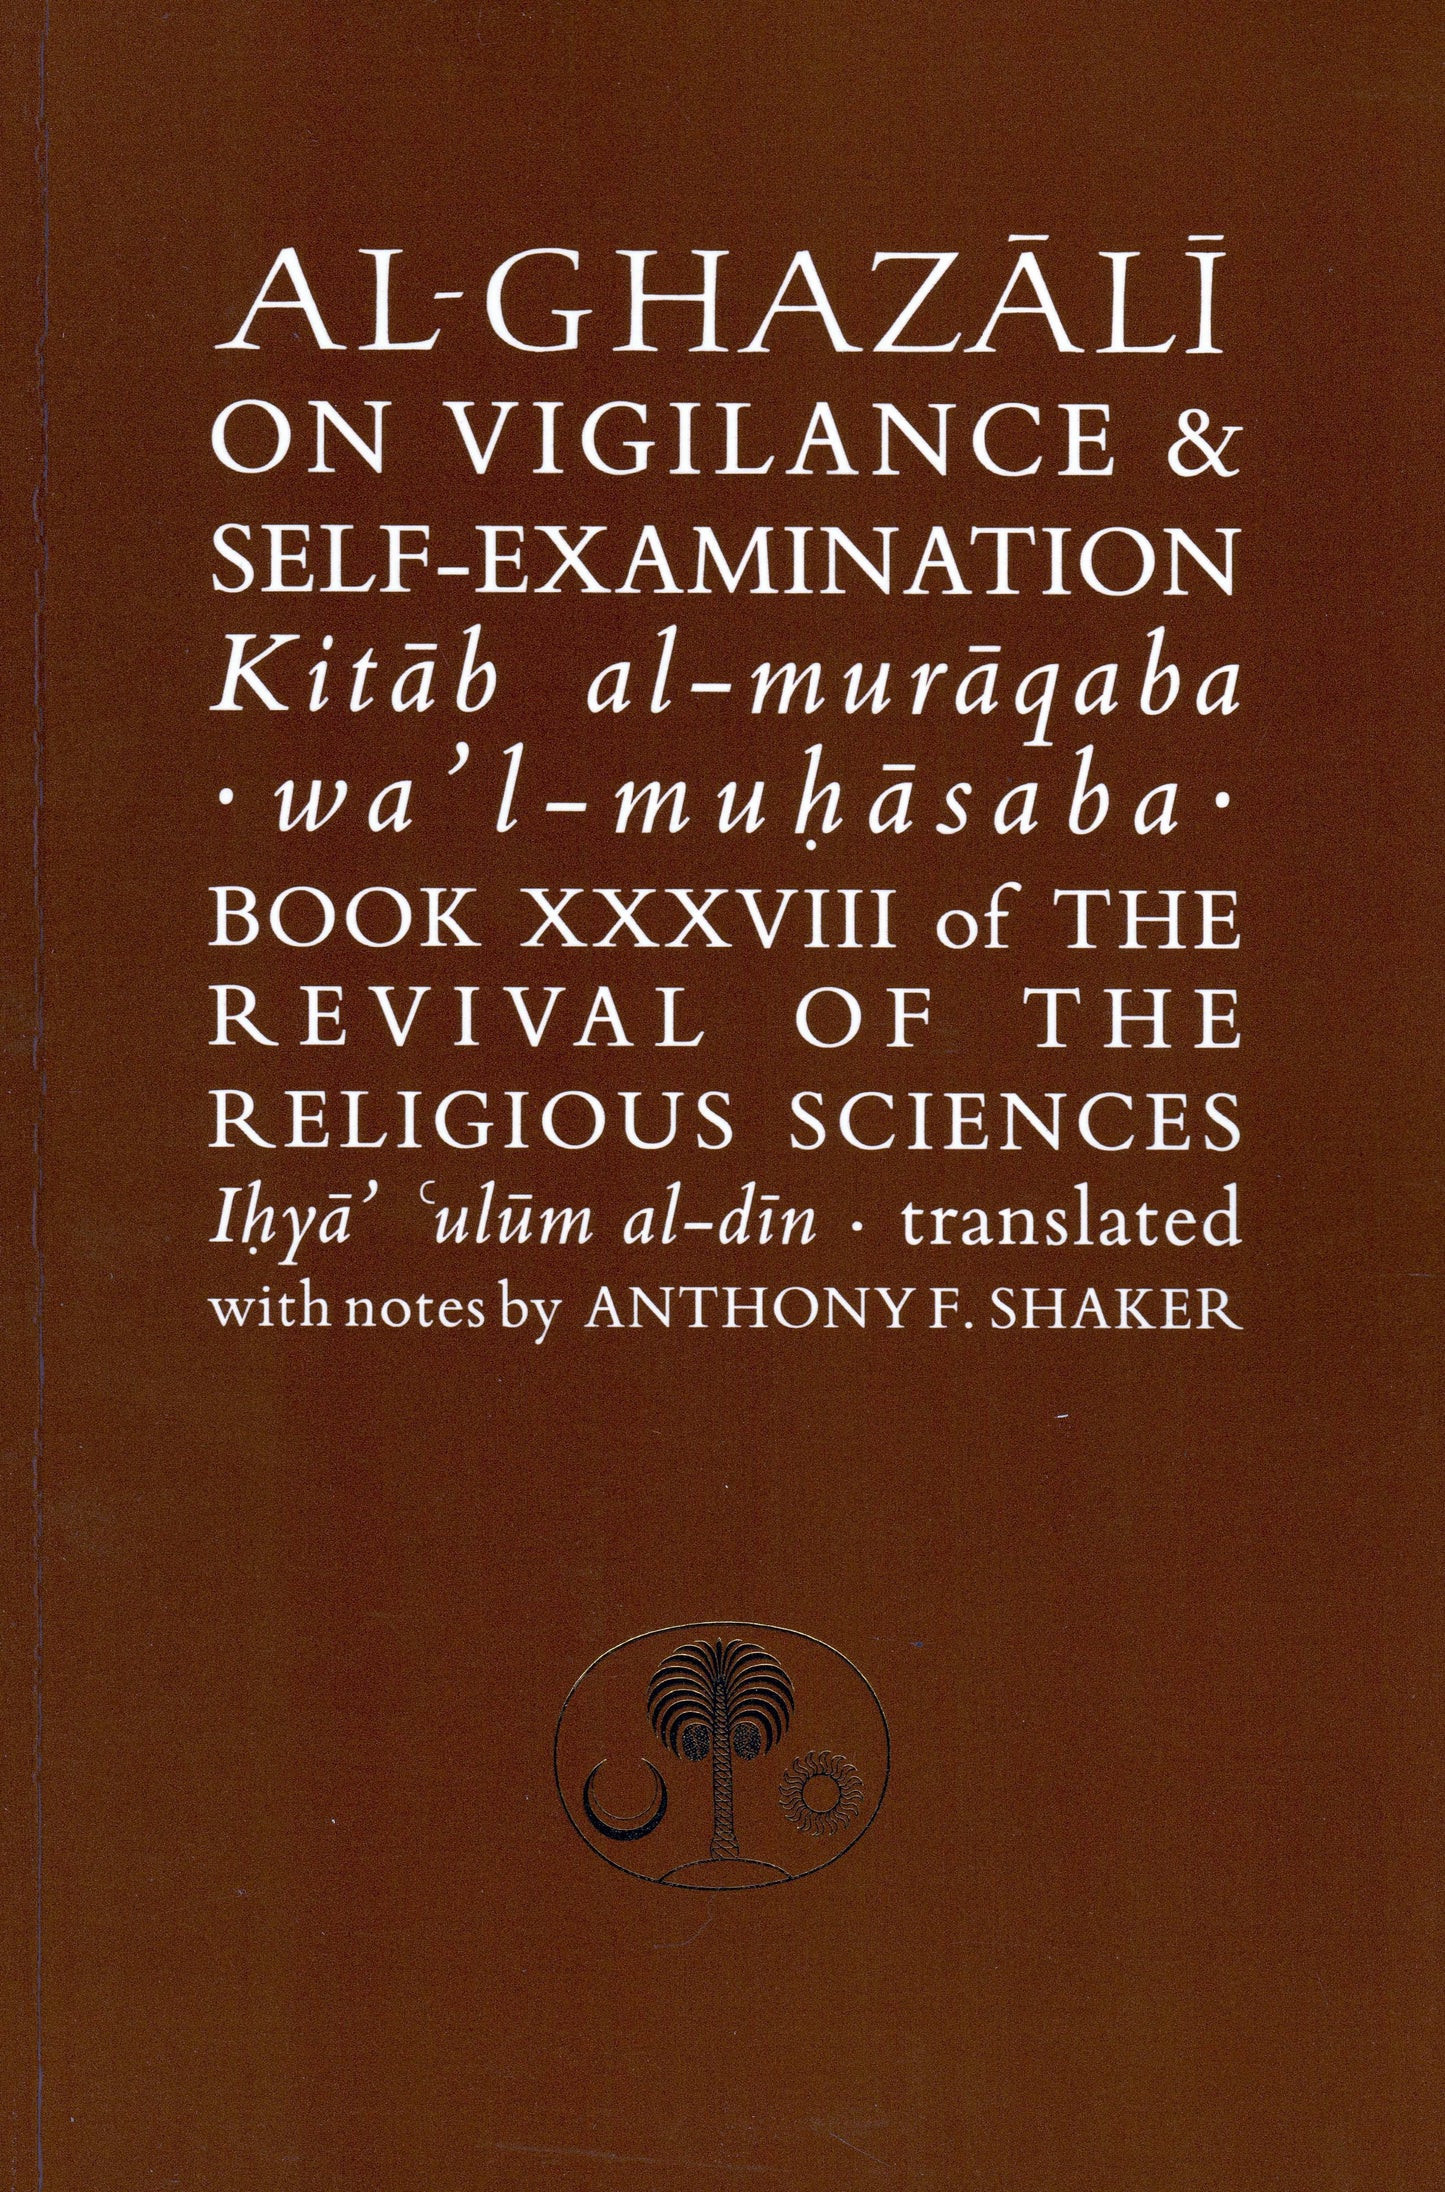 Al-Ghazali On Vigilance And Self-Examination: Kitab al-Muraqaba wa'l-Muhasaba (Ihya Ulum al-Din)